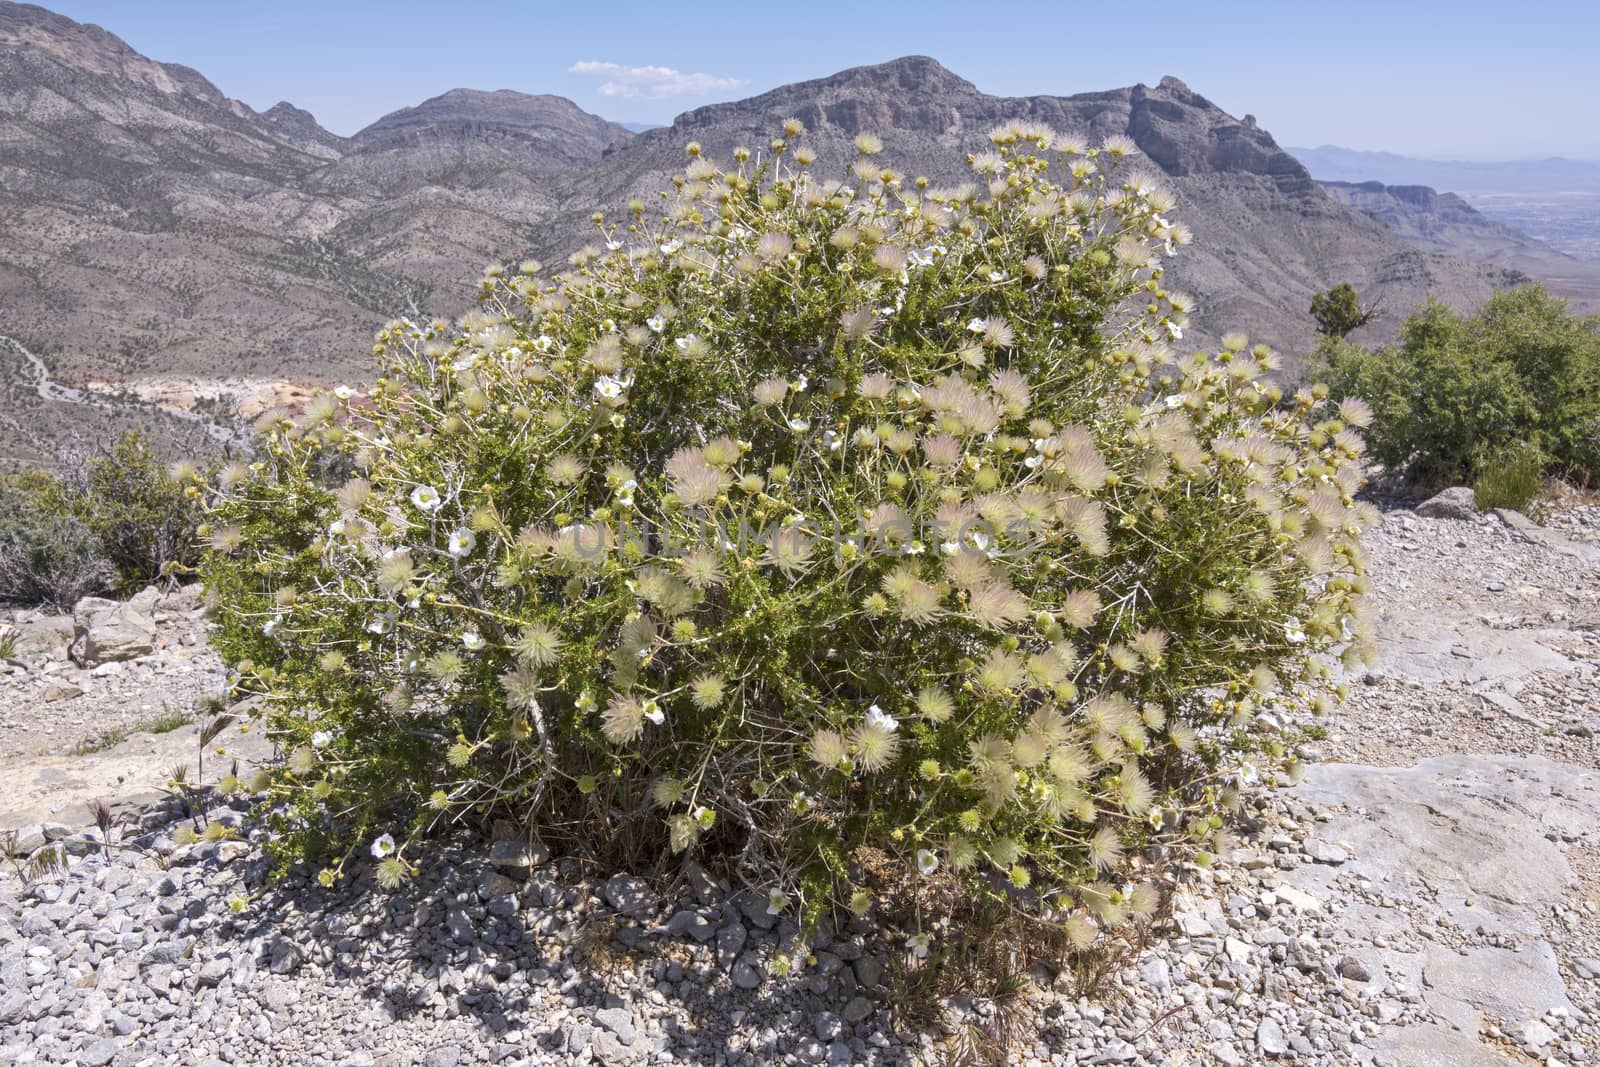 Apache plume in bloom in desert by shakzu